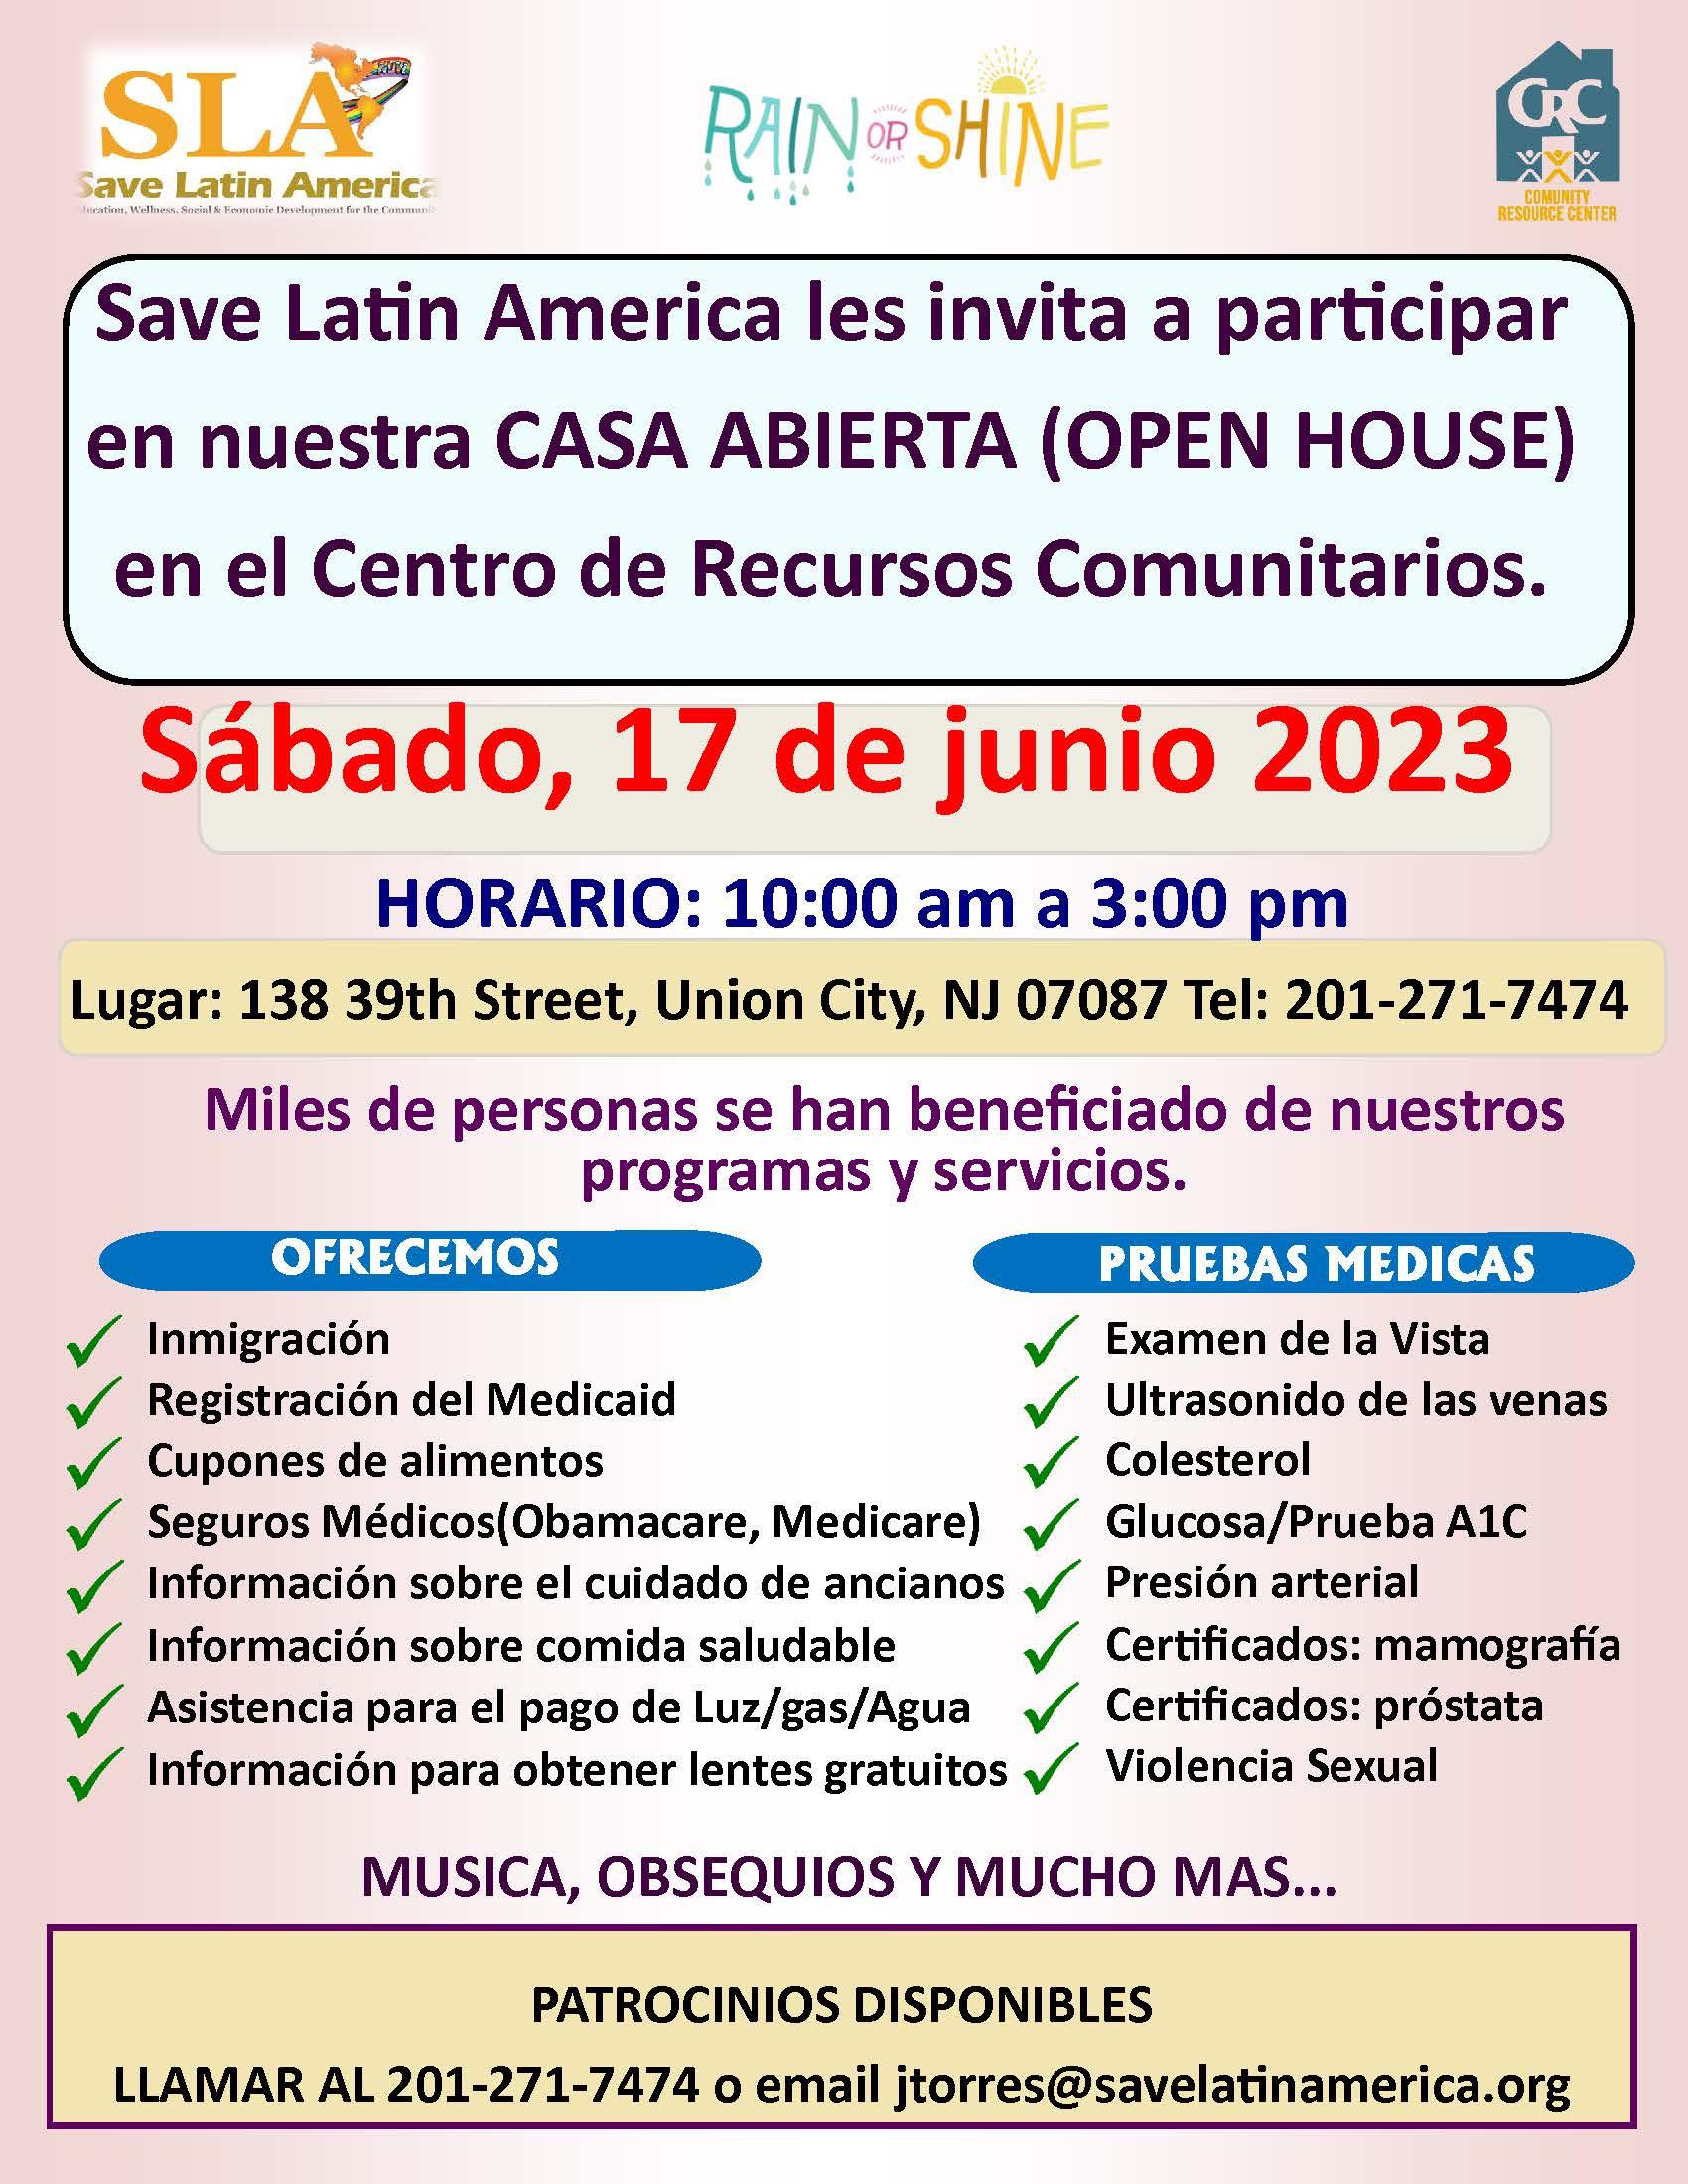 Save Latin America Open House Flyer-English